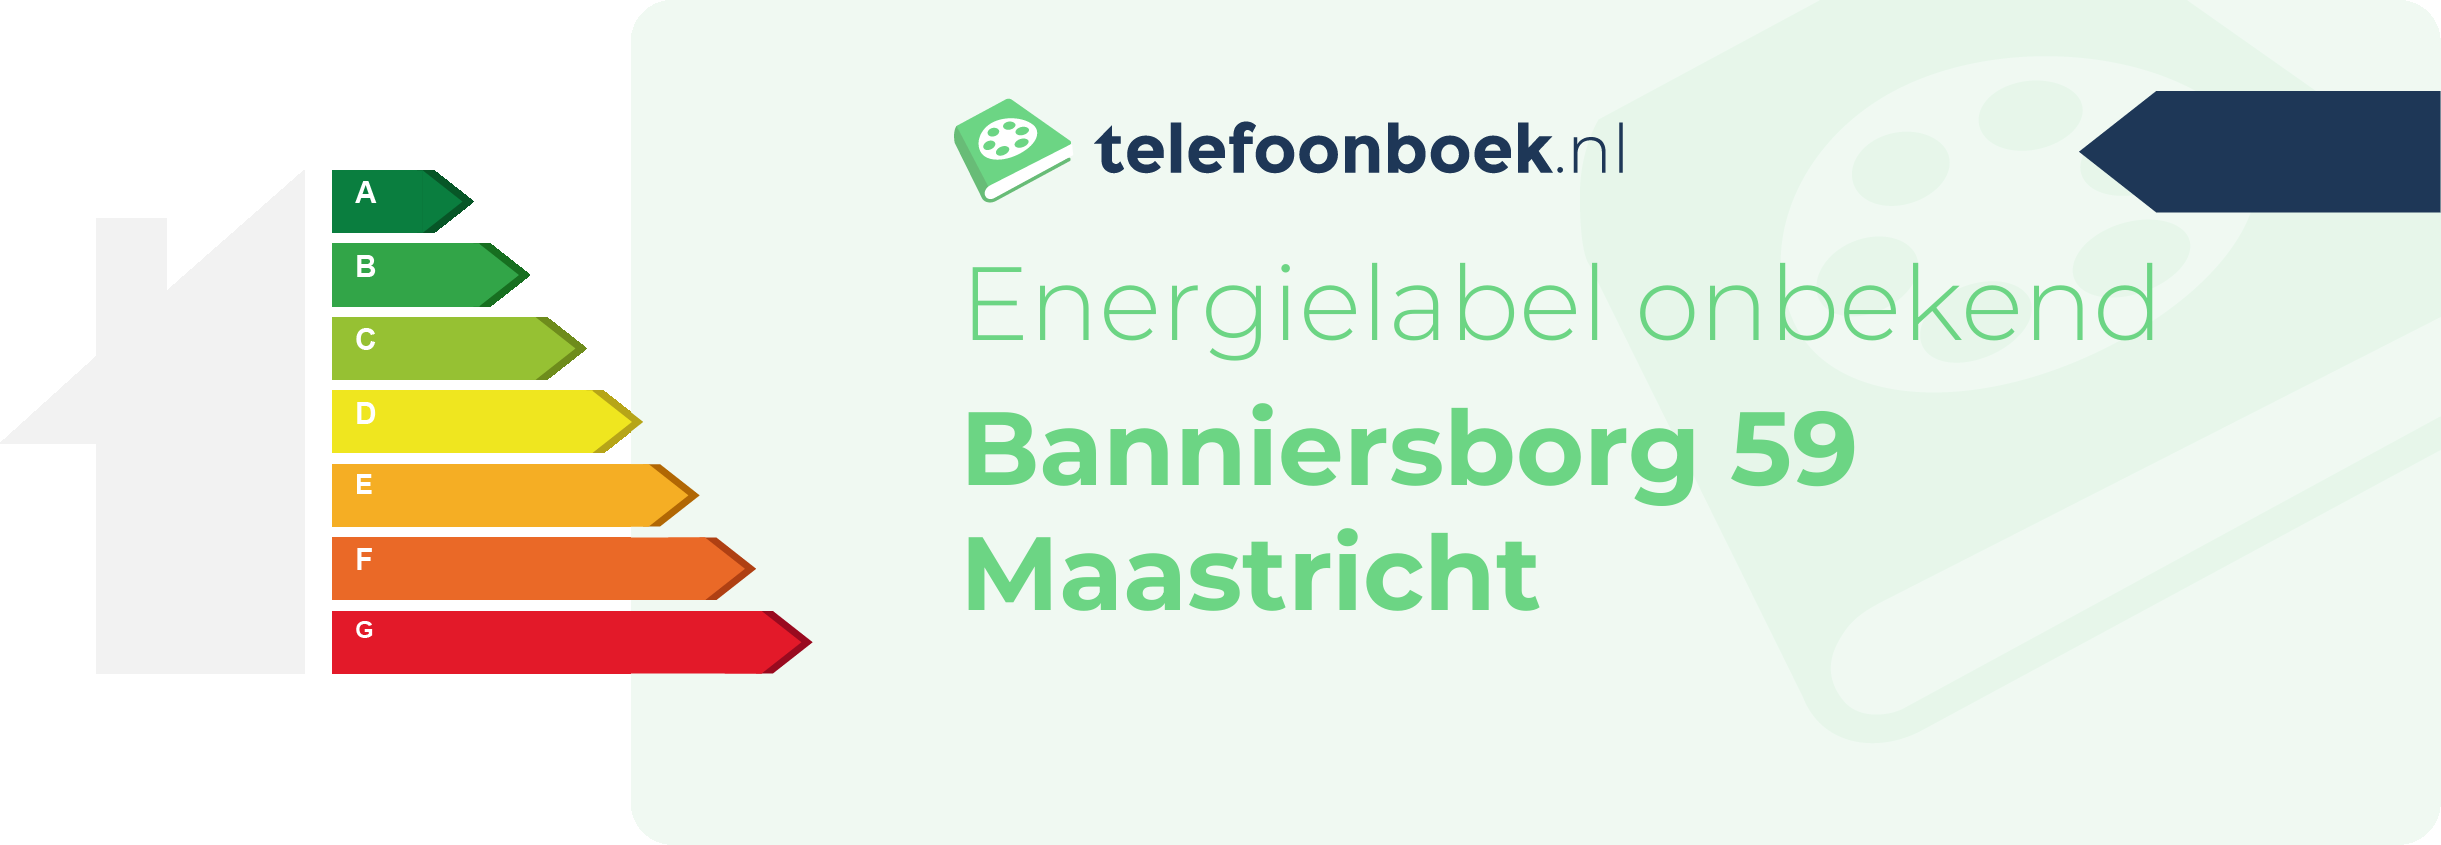 Energielabel Banniersborg 59 Maastricht